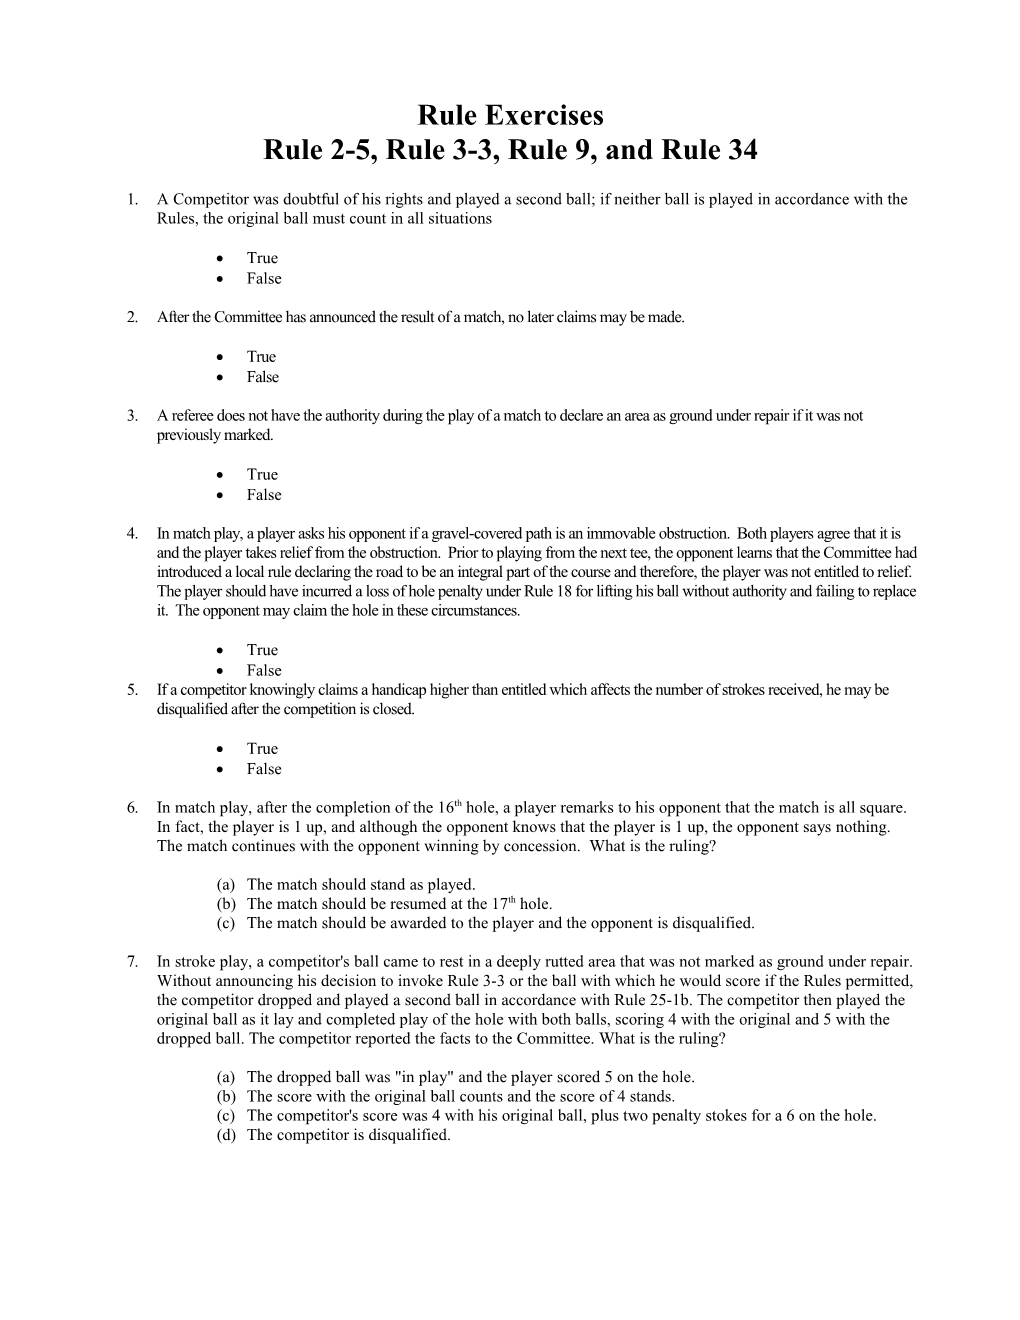 Rule Exercises Rule 2-5, Rule 3-3, Rule 9, and Rule 34